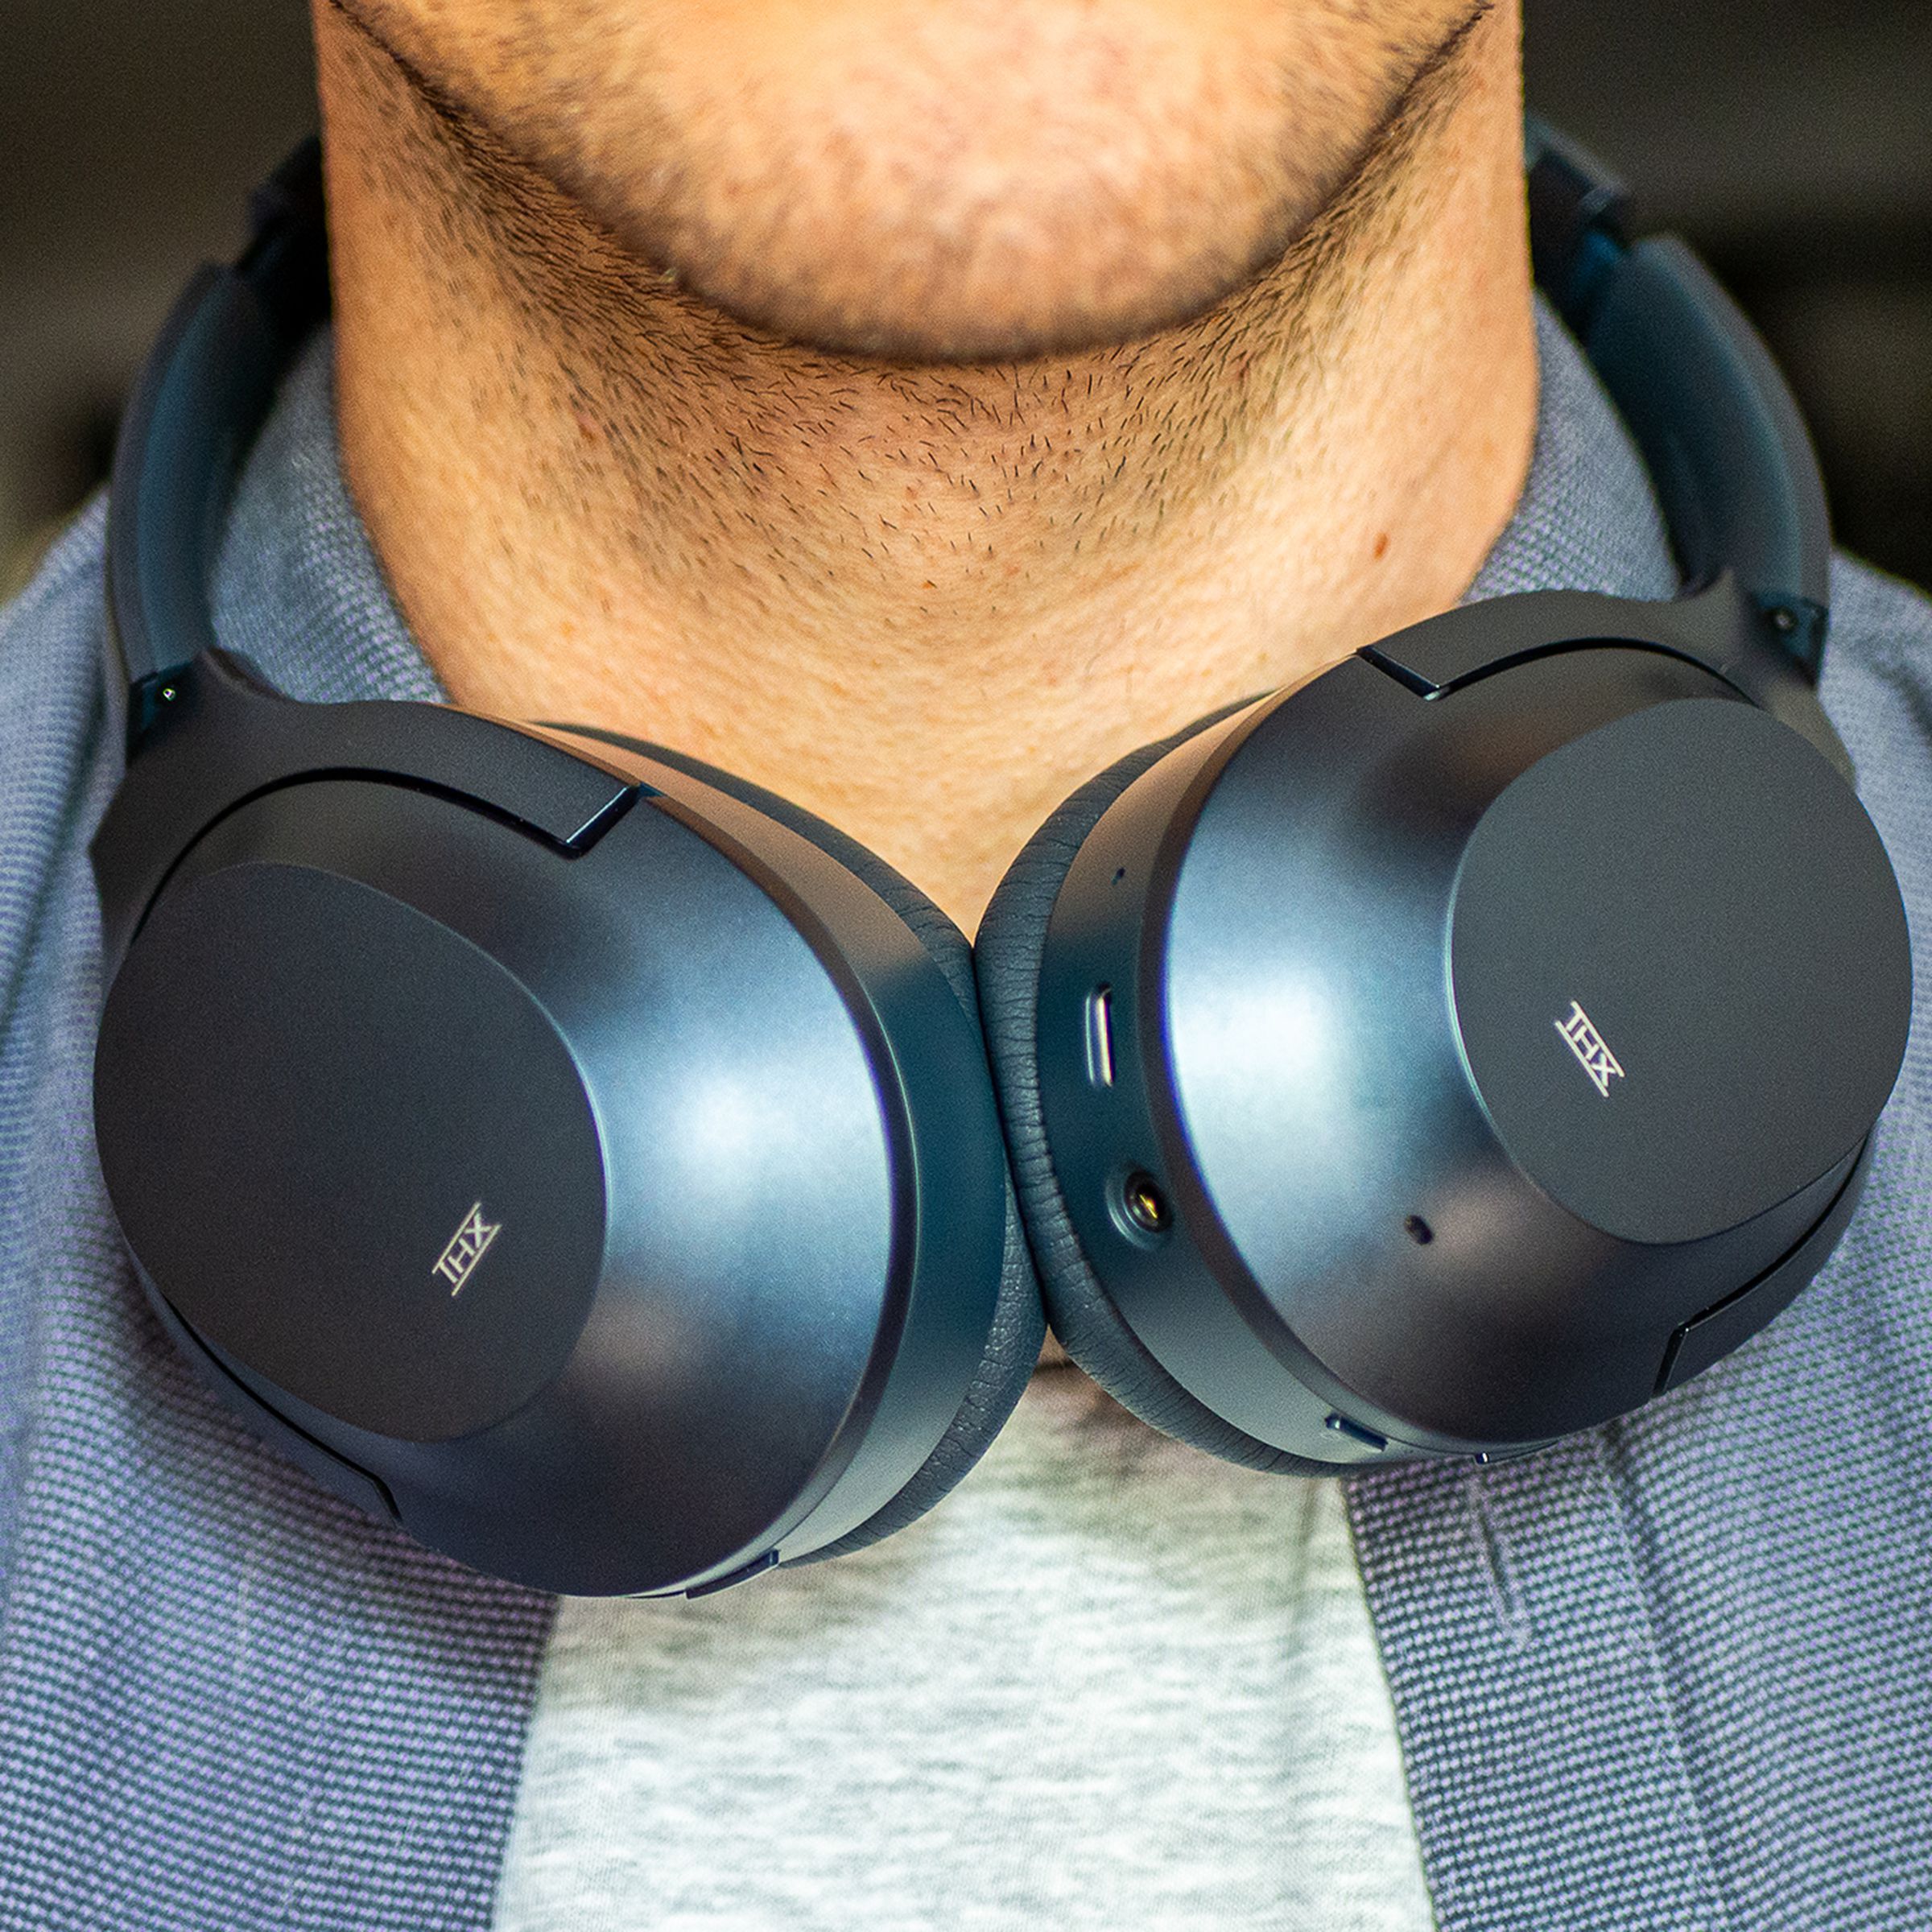 Razer Opus, the best noise-canceling headphones for around $200, worn around the neck.